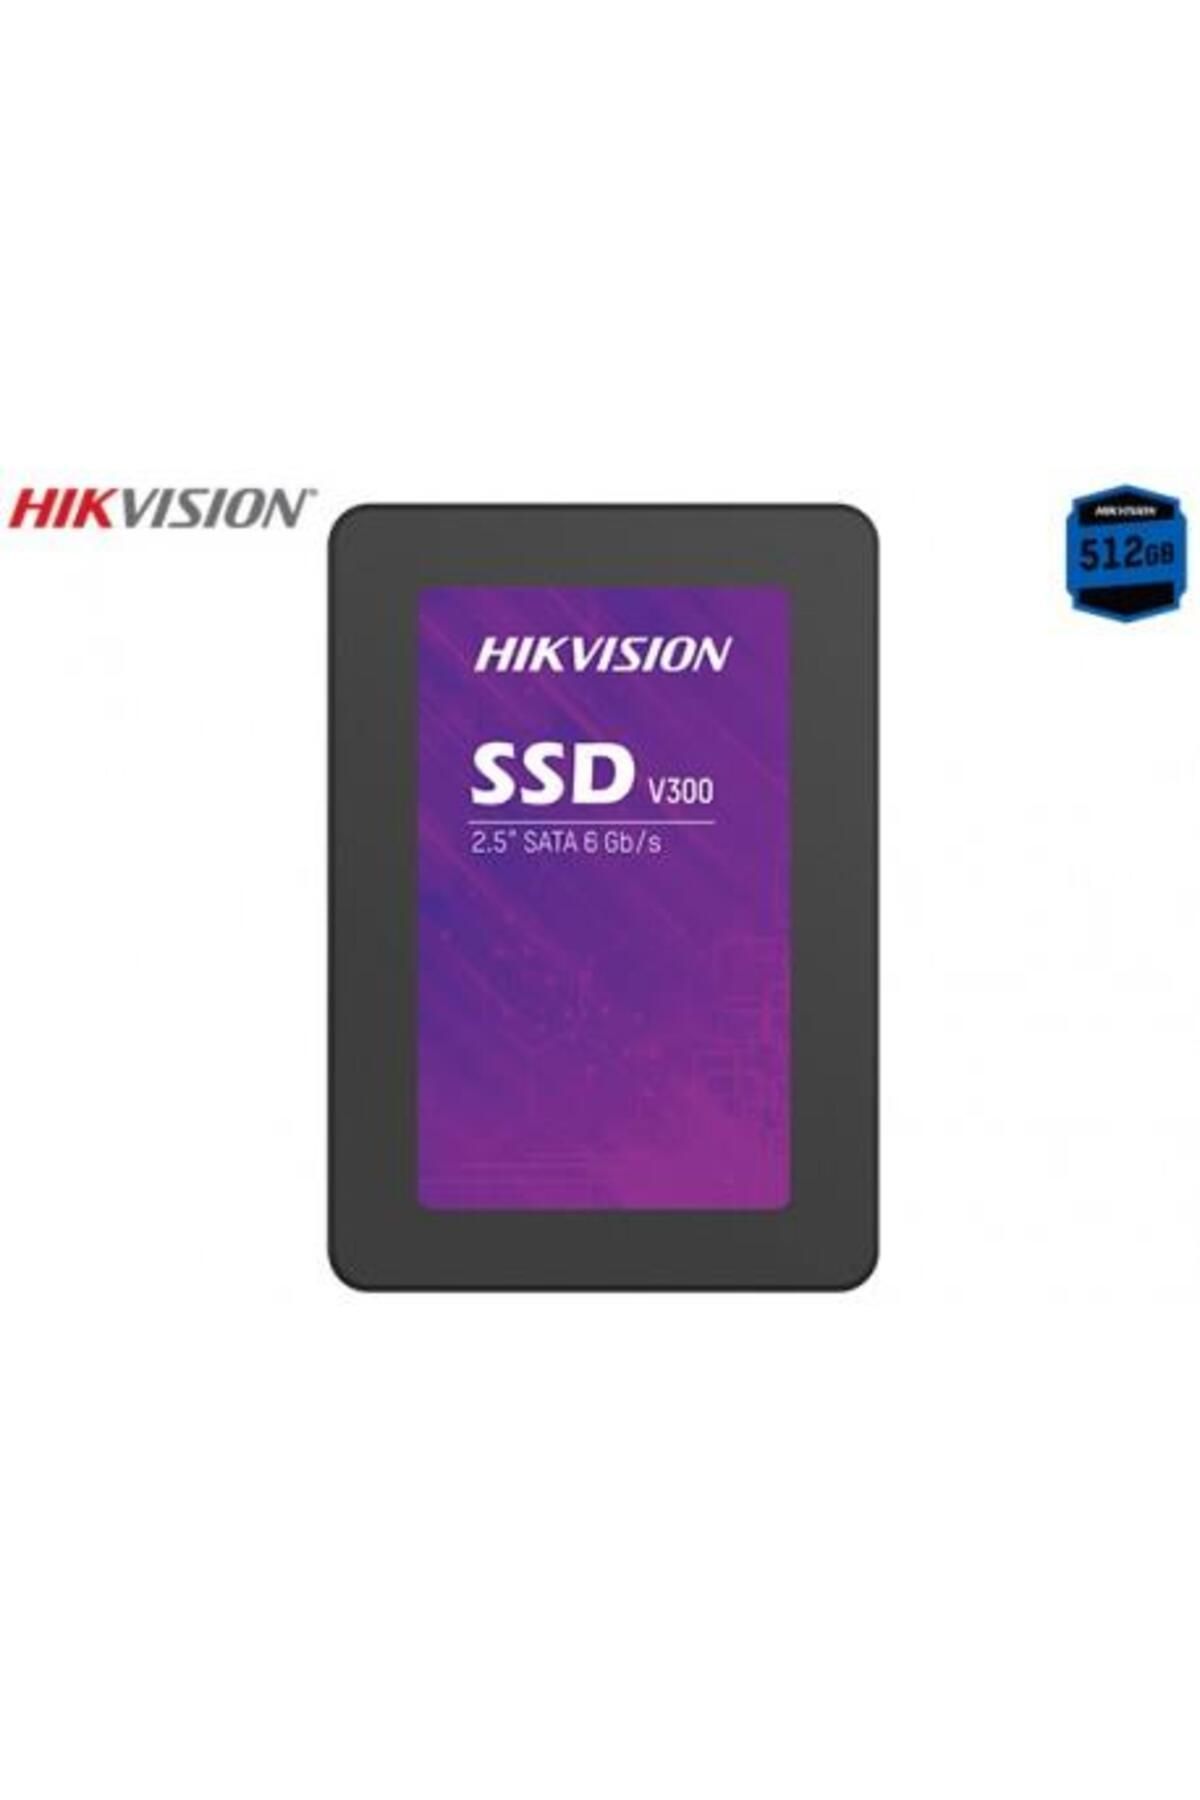 Hikvision V300 2.5İnç 512Gb Dahili Güvenlik SSD Disk